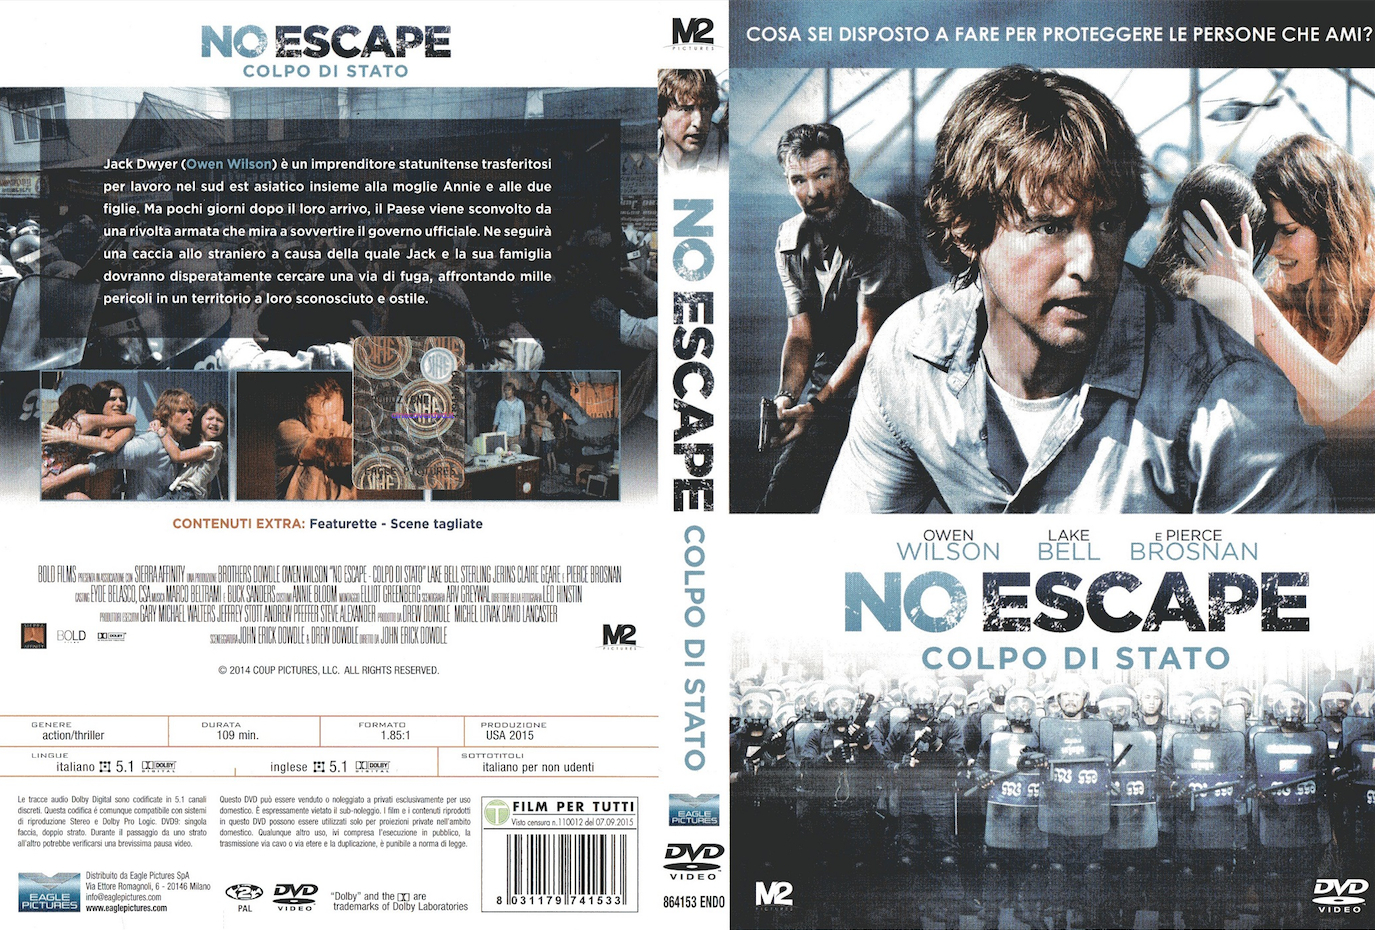 No Escape. No Escape перевод. No Escape.exe. Книга о фотографии no Escape. Сбежать перевод